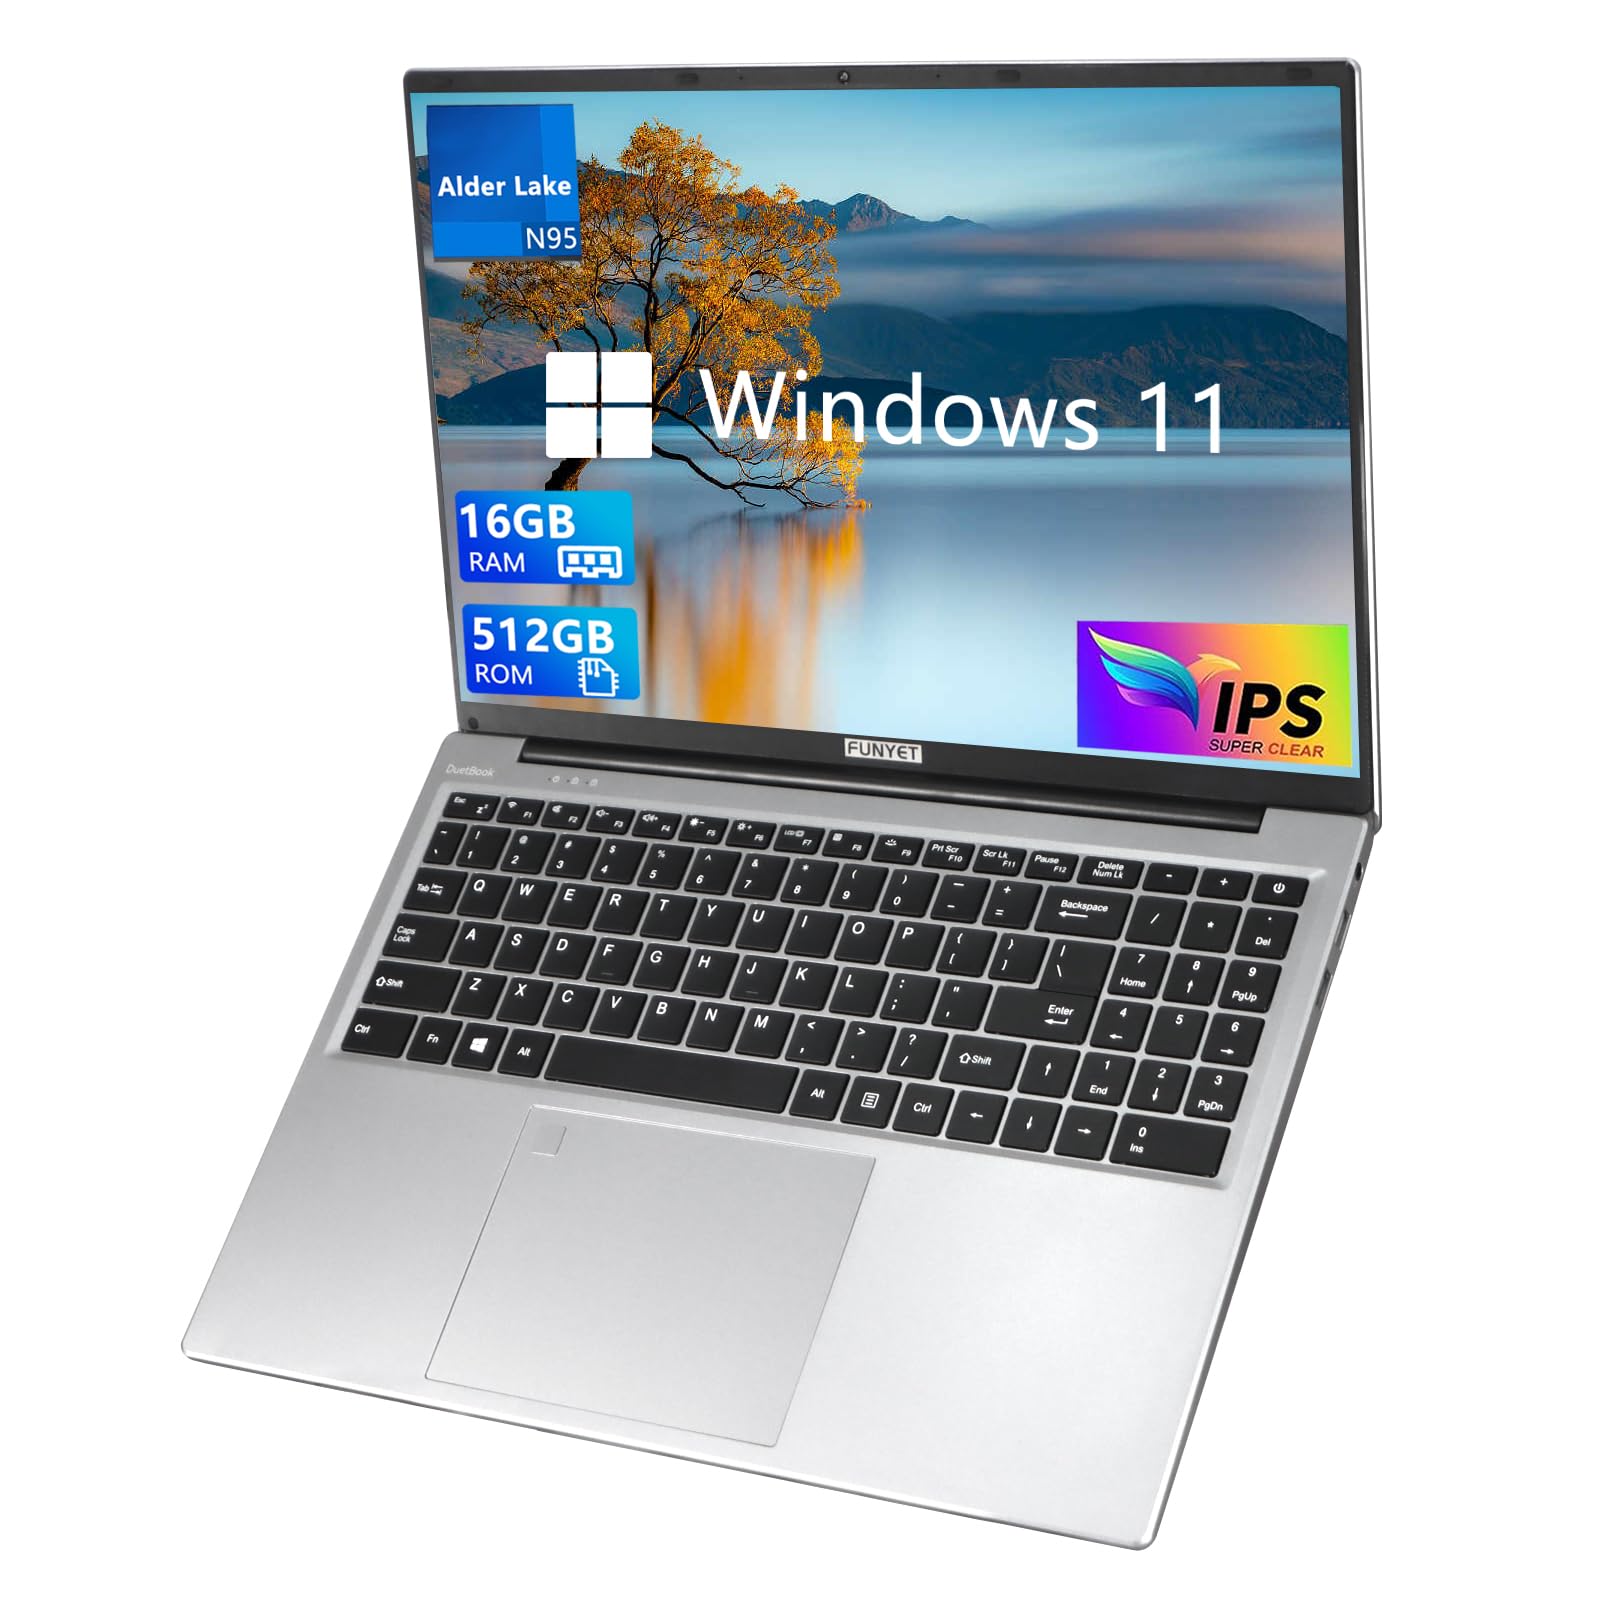 FUNYET 16 inch Laptop 12th Gen Alder Lake N95(Up to 3.4Ghz) 16GB RAM 512GB SSD, Windows 11 Laptop Computer with Narrow Bezels Design, 2.4G/5G WiFi, BT4.2, Fingerprint Unlock, Backlit Keyboard